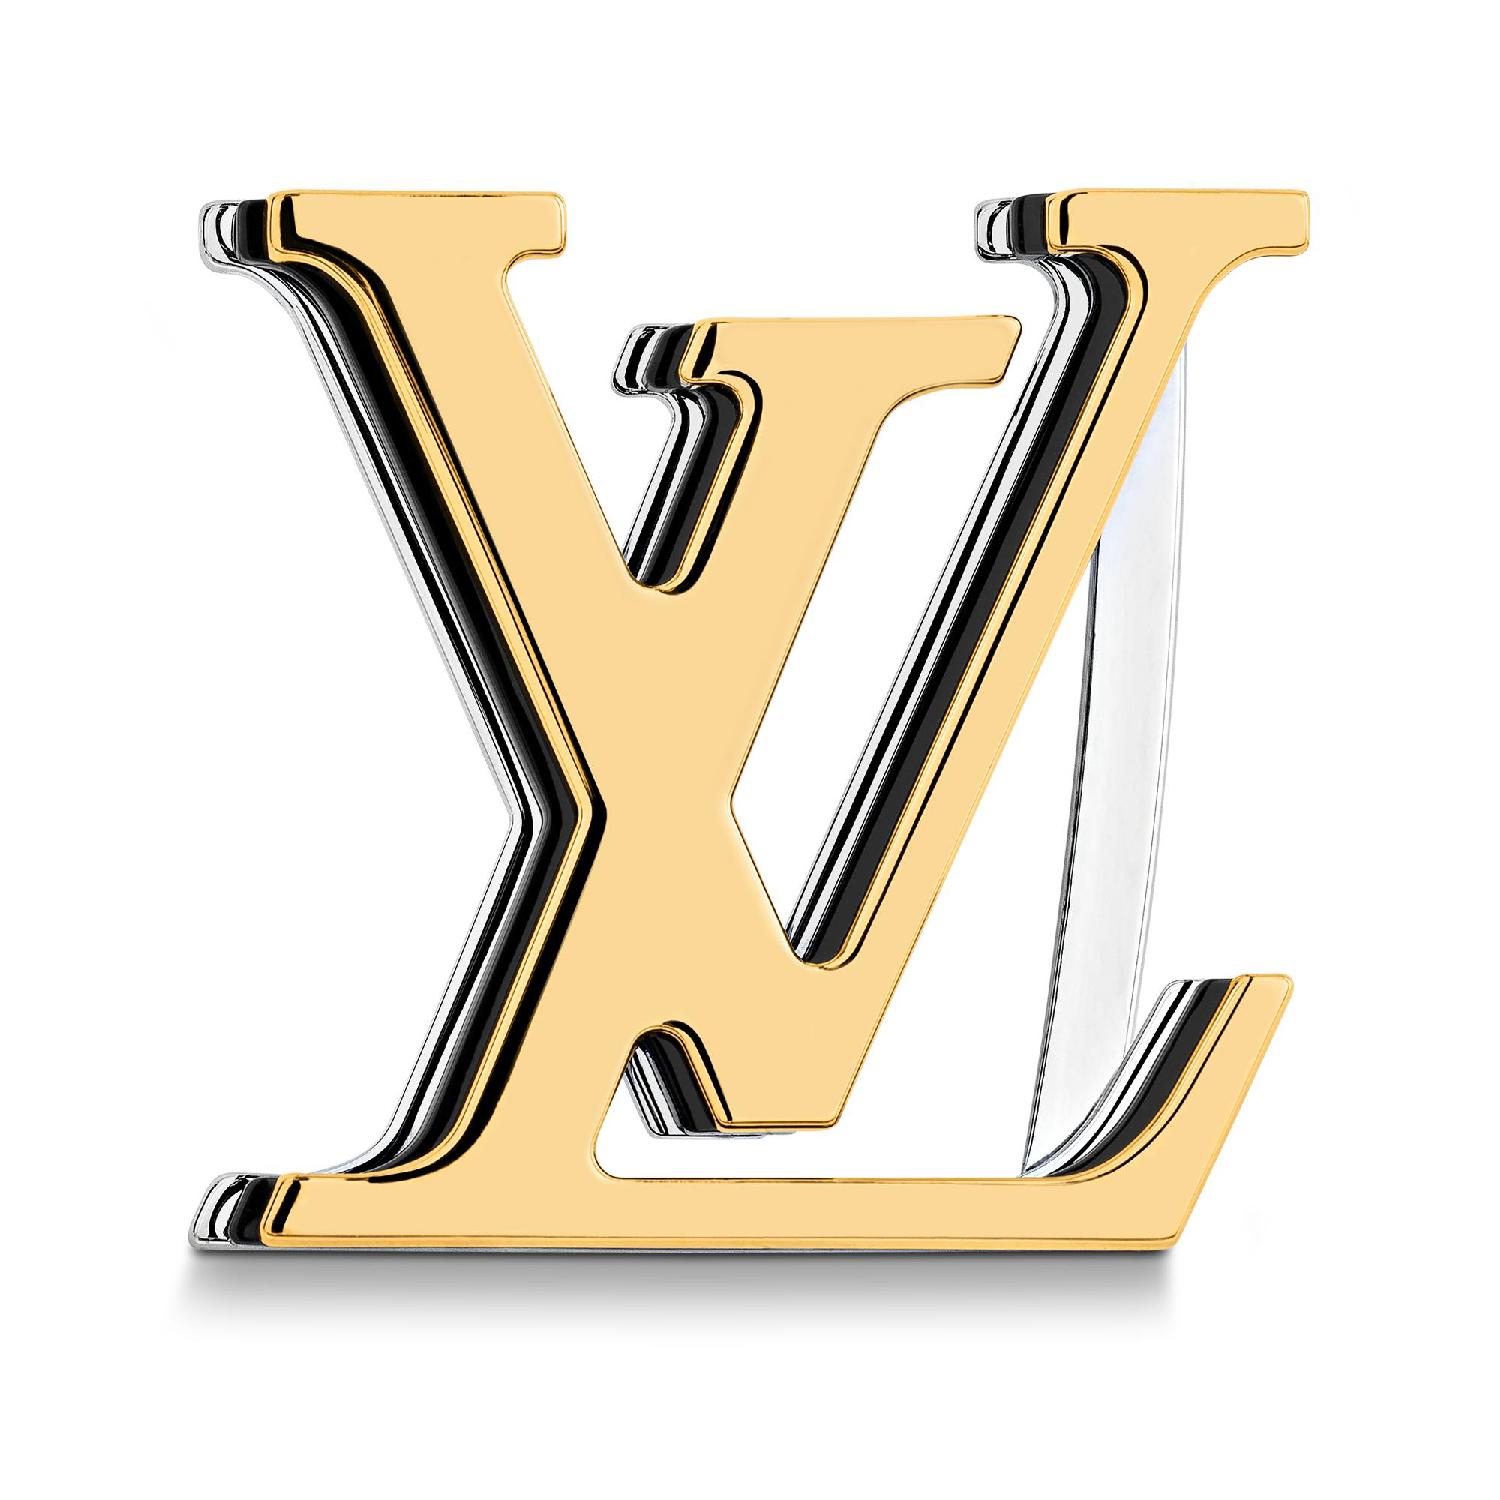 lv logo素材图片